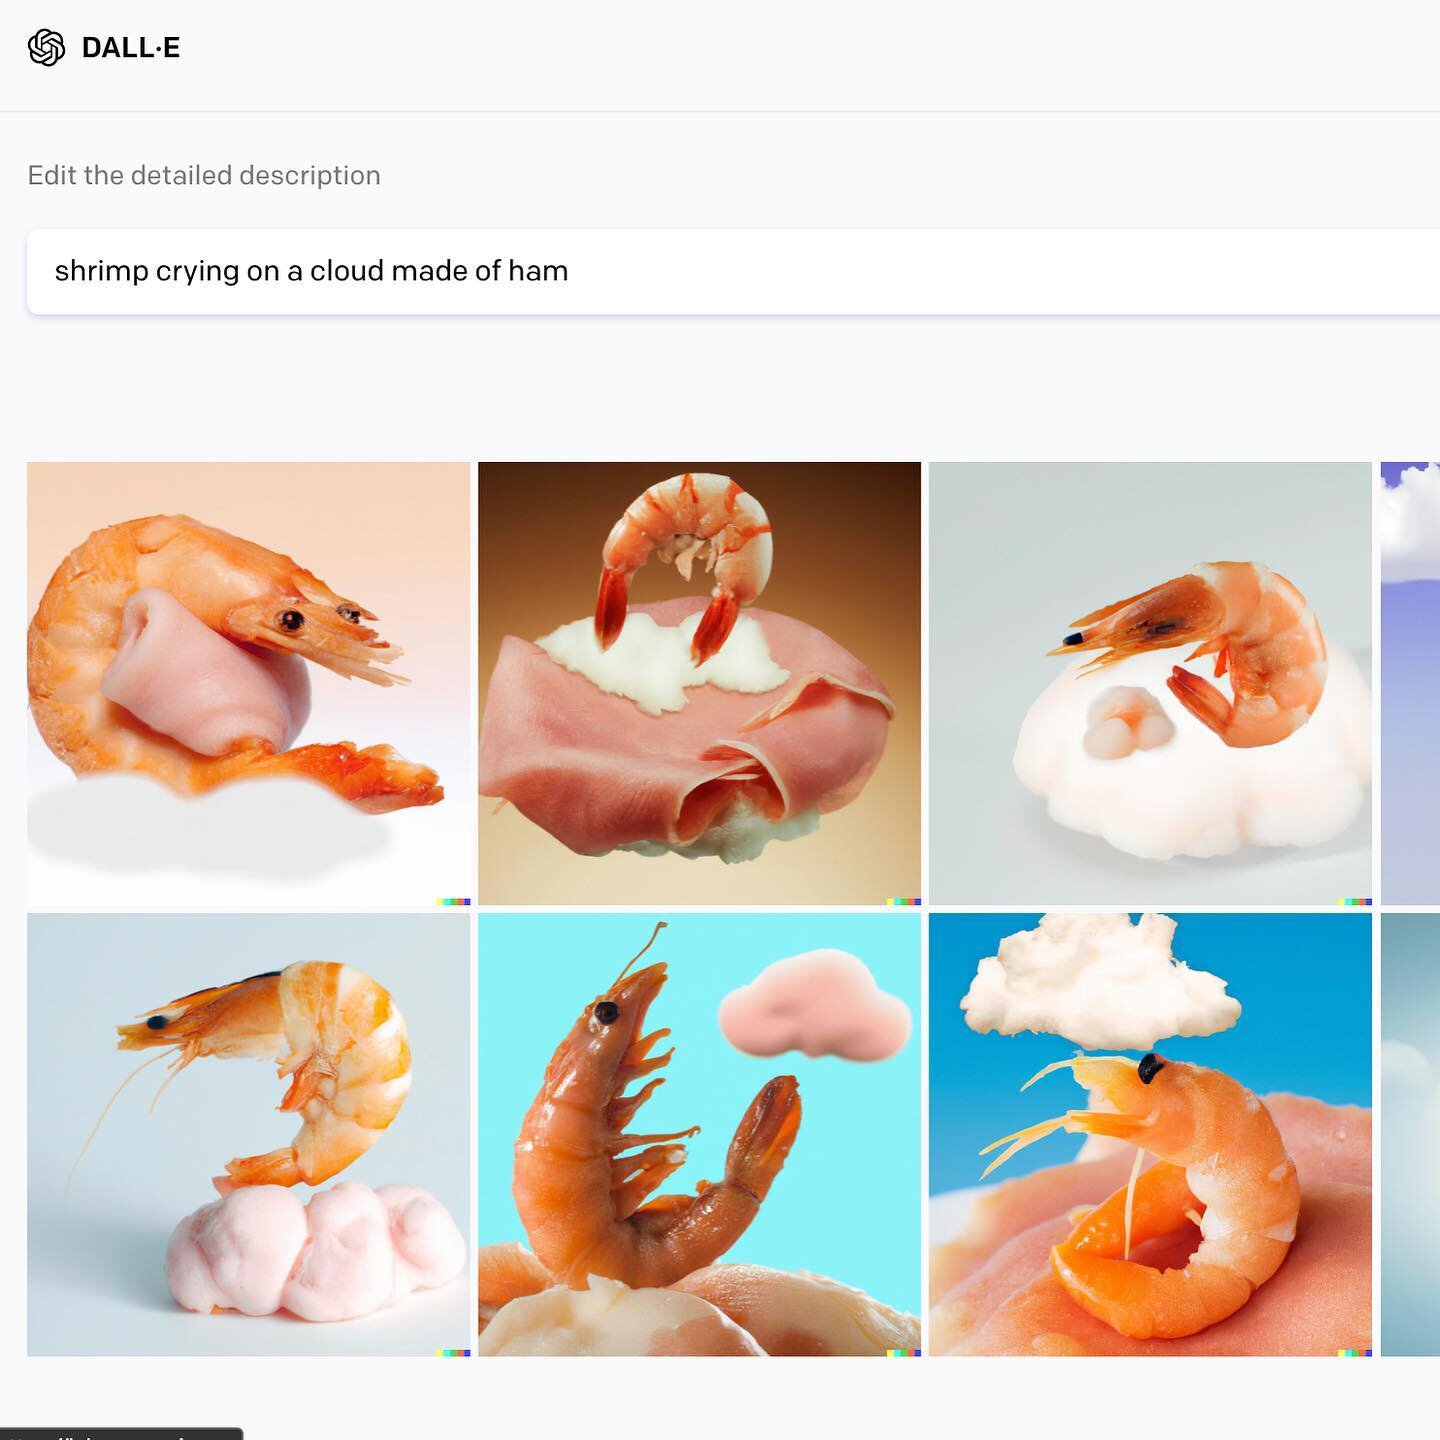 Just shrimp things